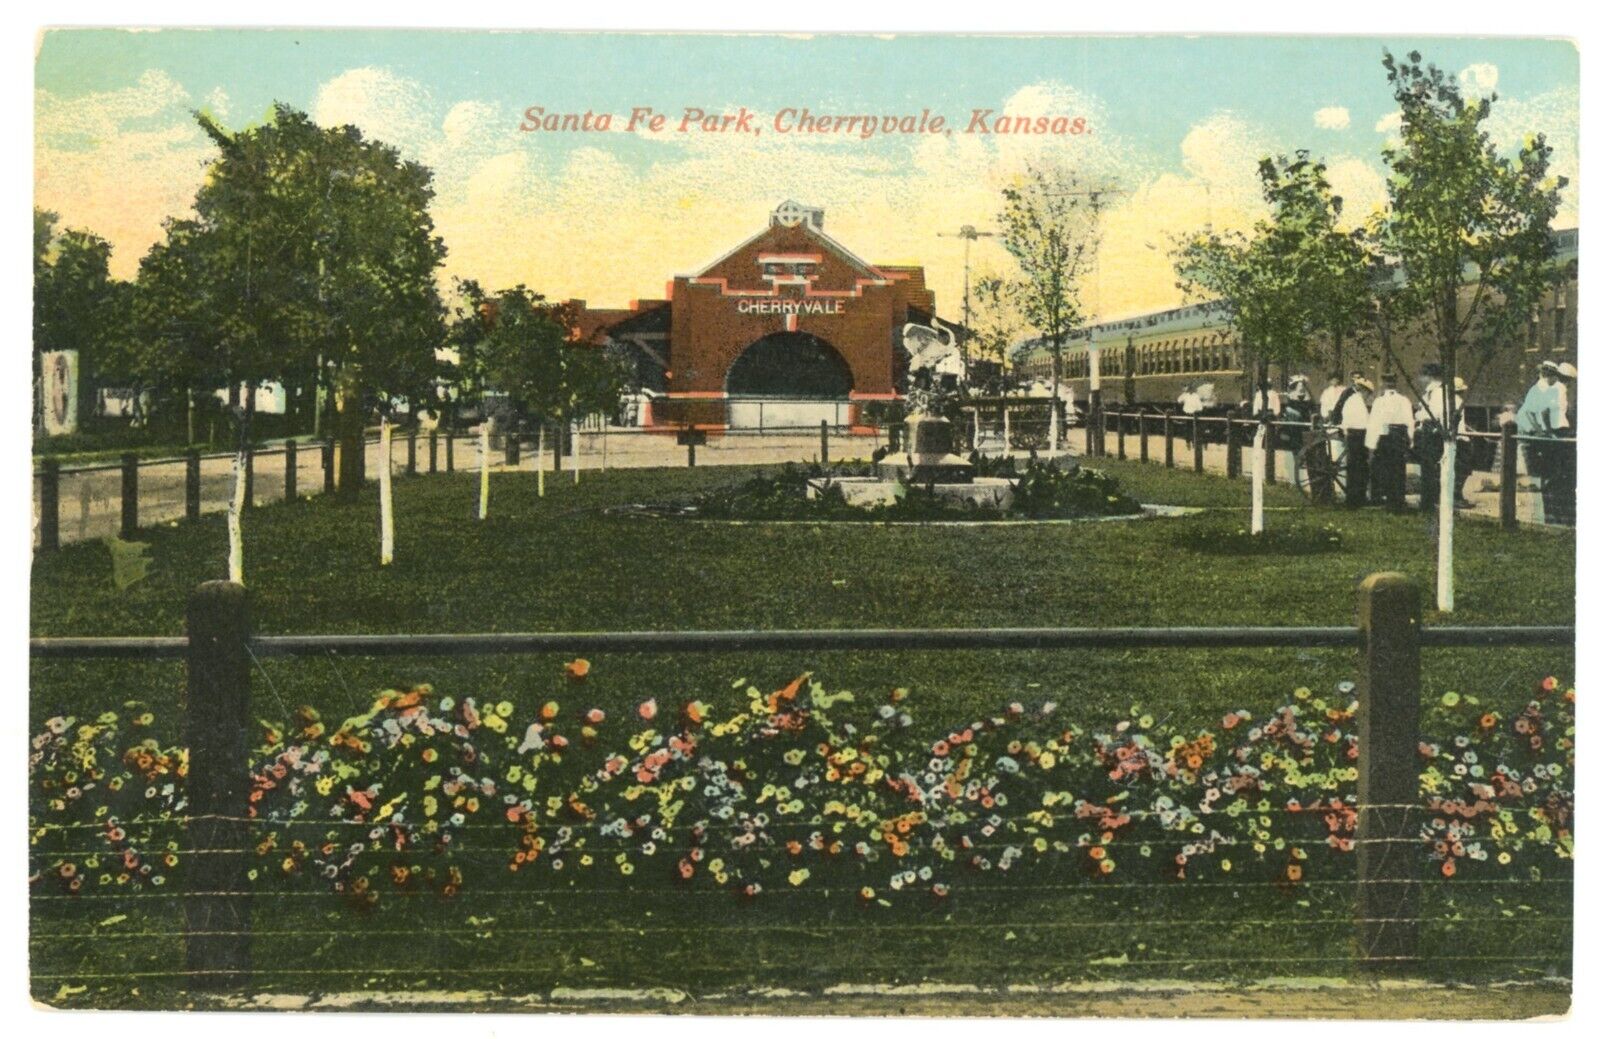 Postcard - Cherryvale, Kansas, Depot & Train at Santa Fe Park - C. 1910